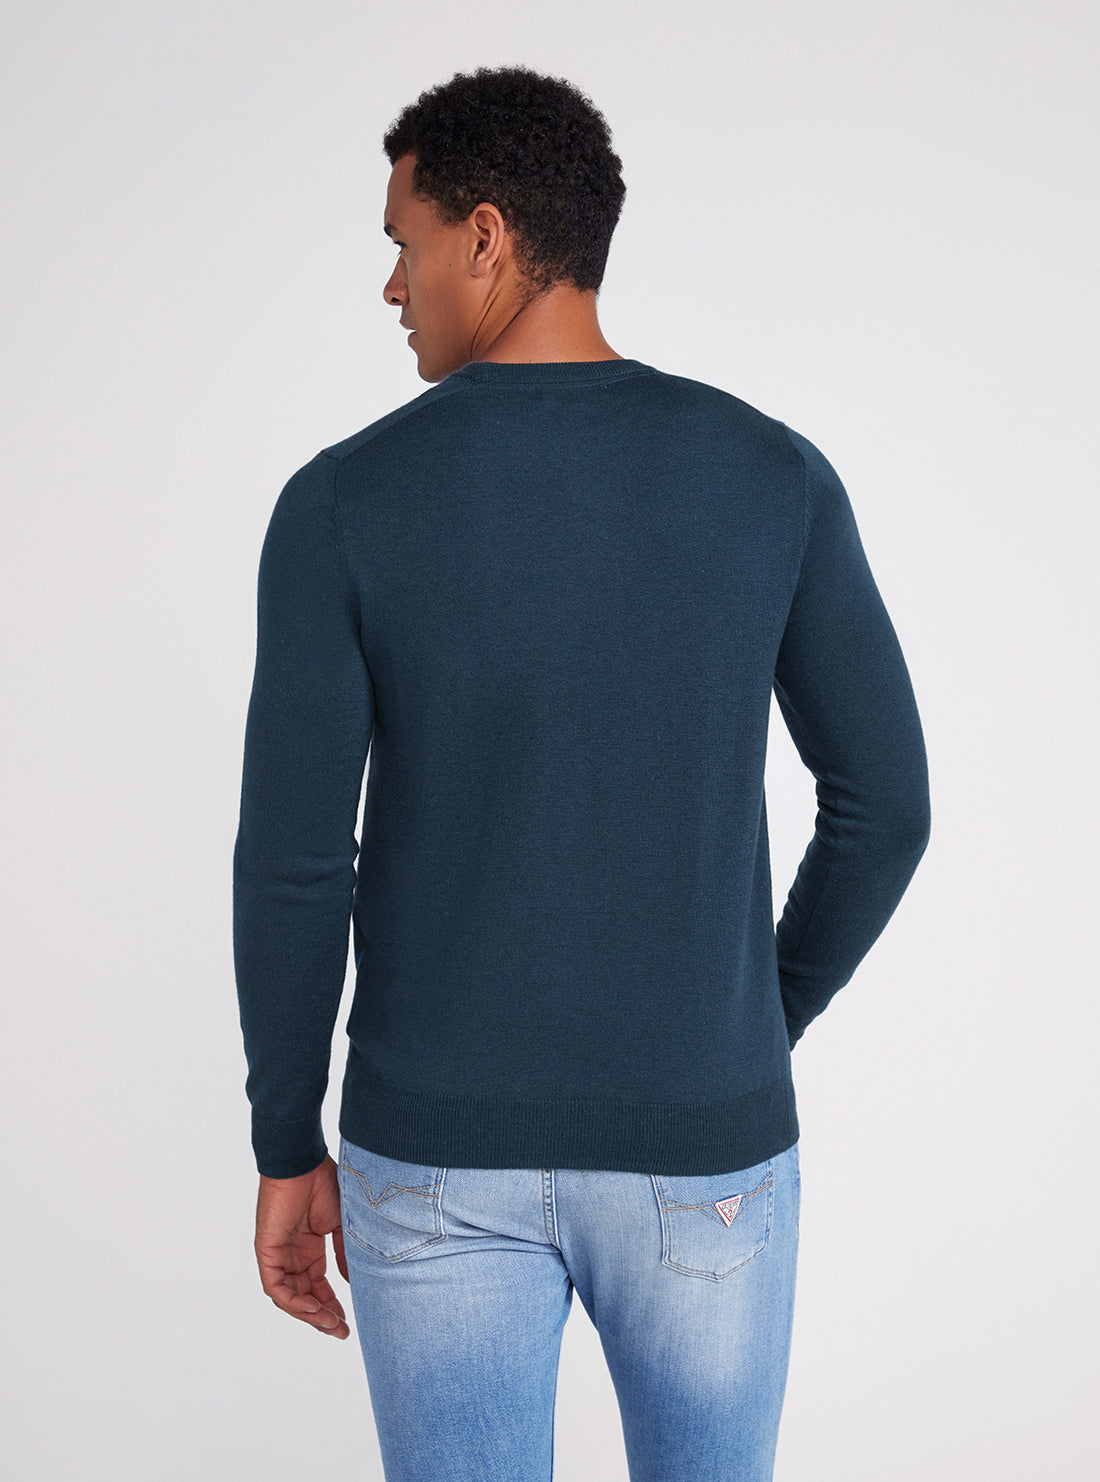 Coastal Blue Valentine Knit Jumper | GUESS Men's Apparel | back view